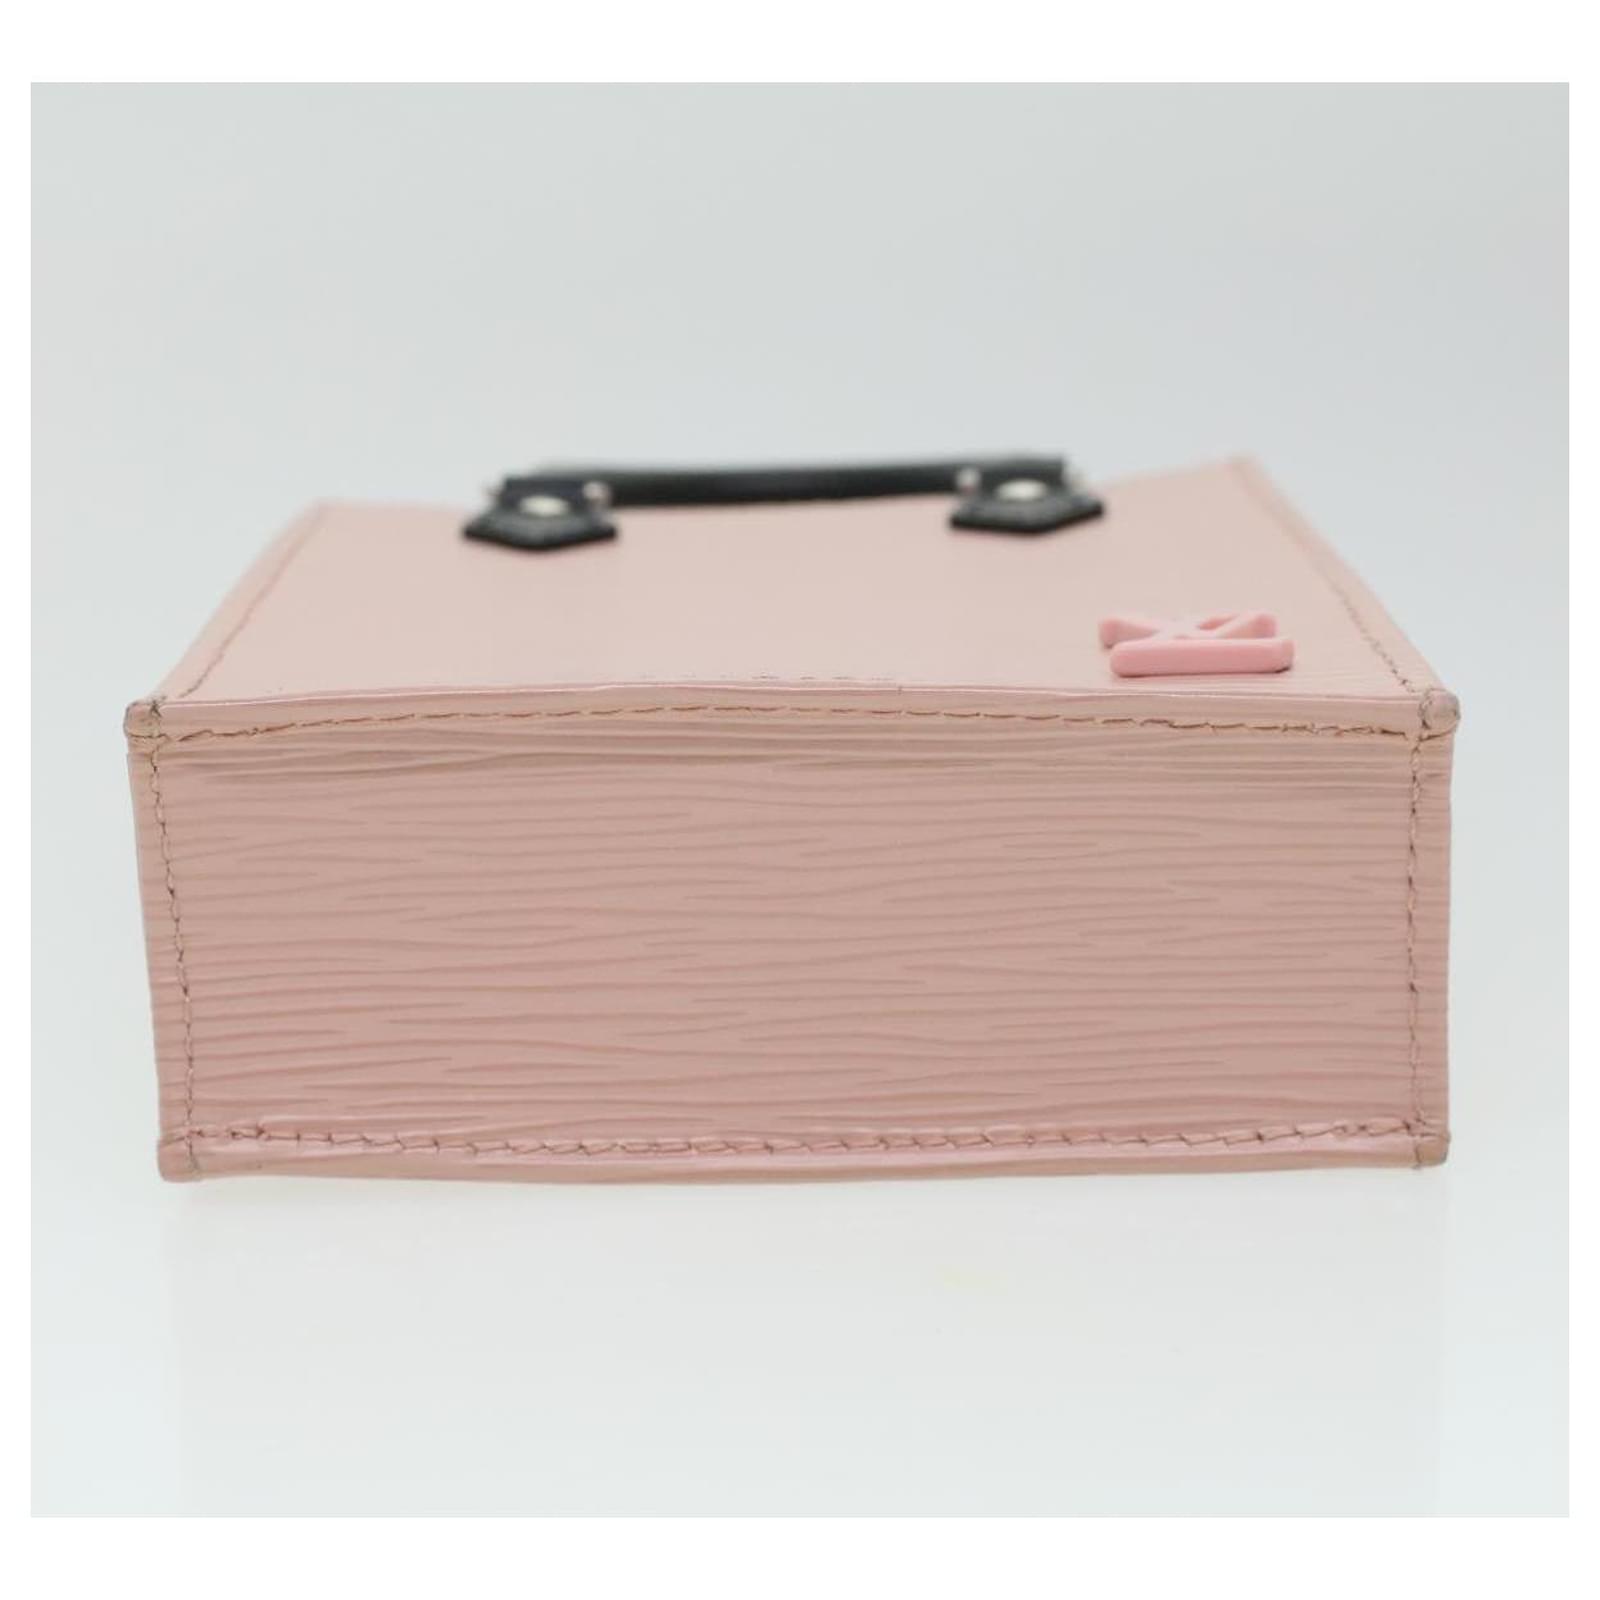 LOUIS VUITTON Epi Petit Sac Plat Hand Shoulder Bag Pink M69575 New